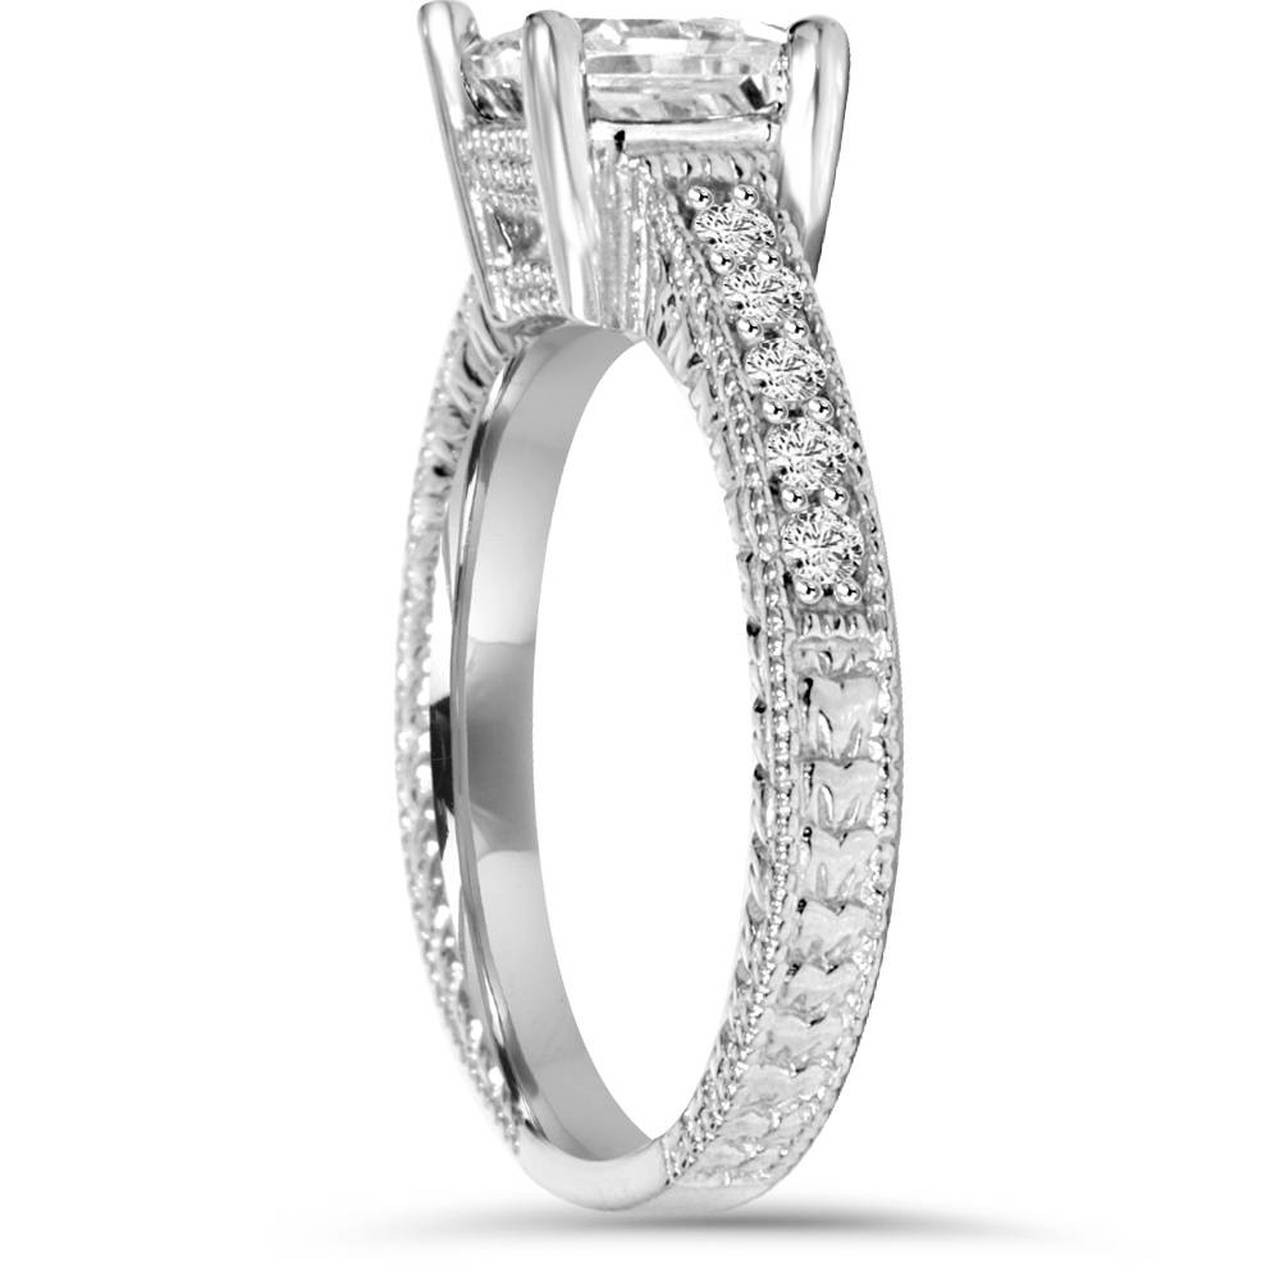 Princess Cut Vintage Engagement Ring
 Vintage Princess Cut Real Diamond Engagement Ring 1ct